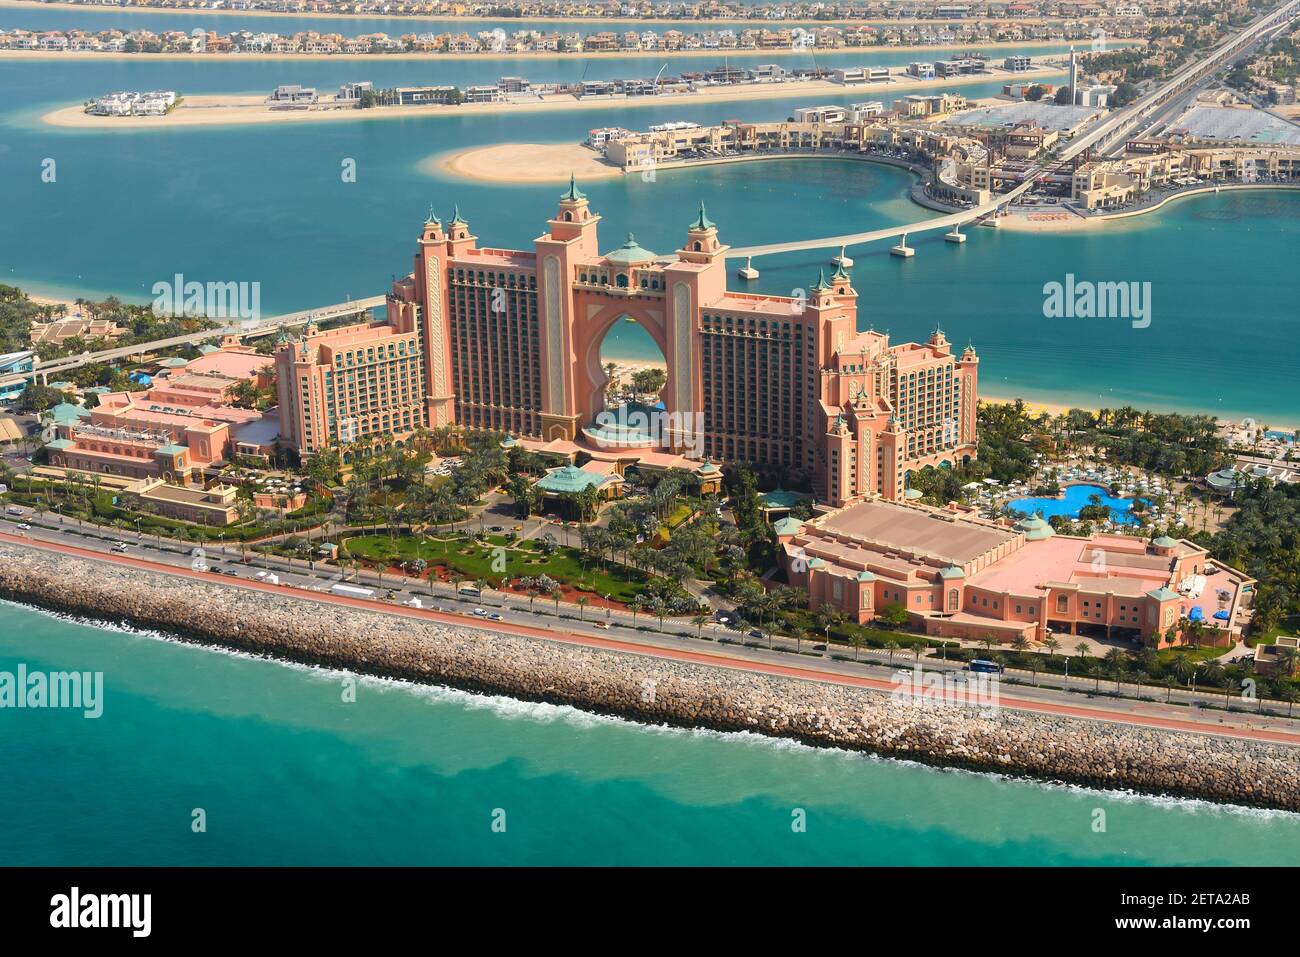 Atlantis The Palm, Dubai Hotel located in Palm Jumeirah, Dubai, United Arab Emirates. Aerial view of Atlantis Resort in The Palm artificial island. Stock Photo